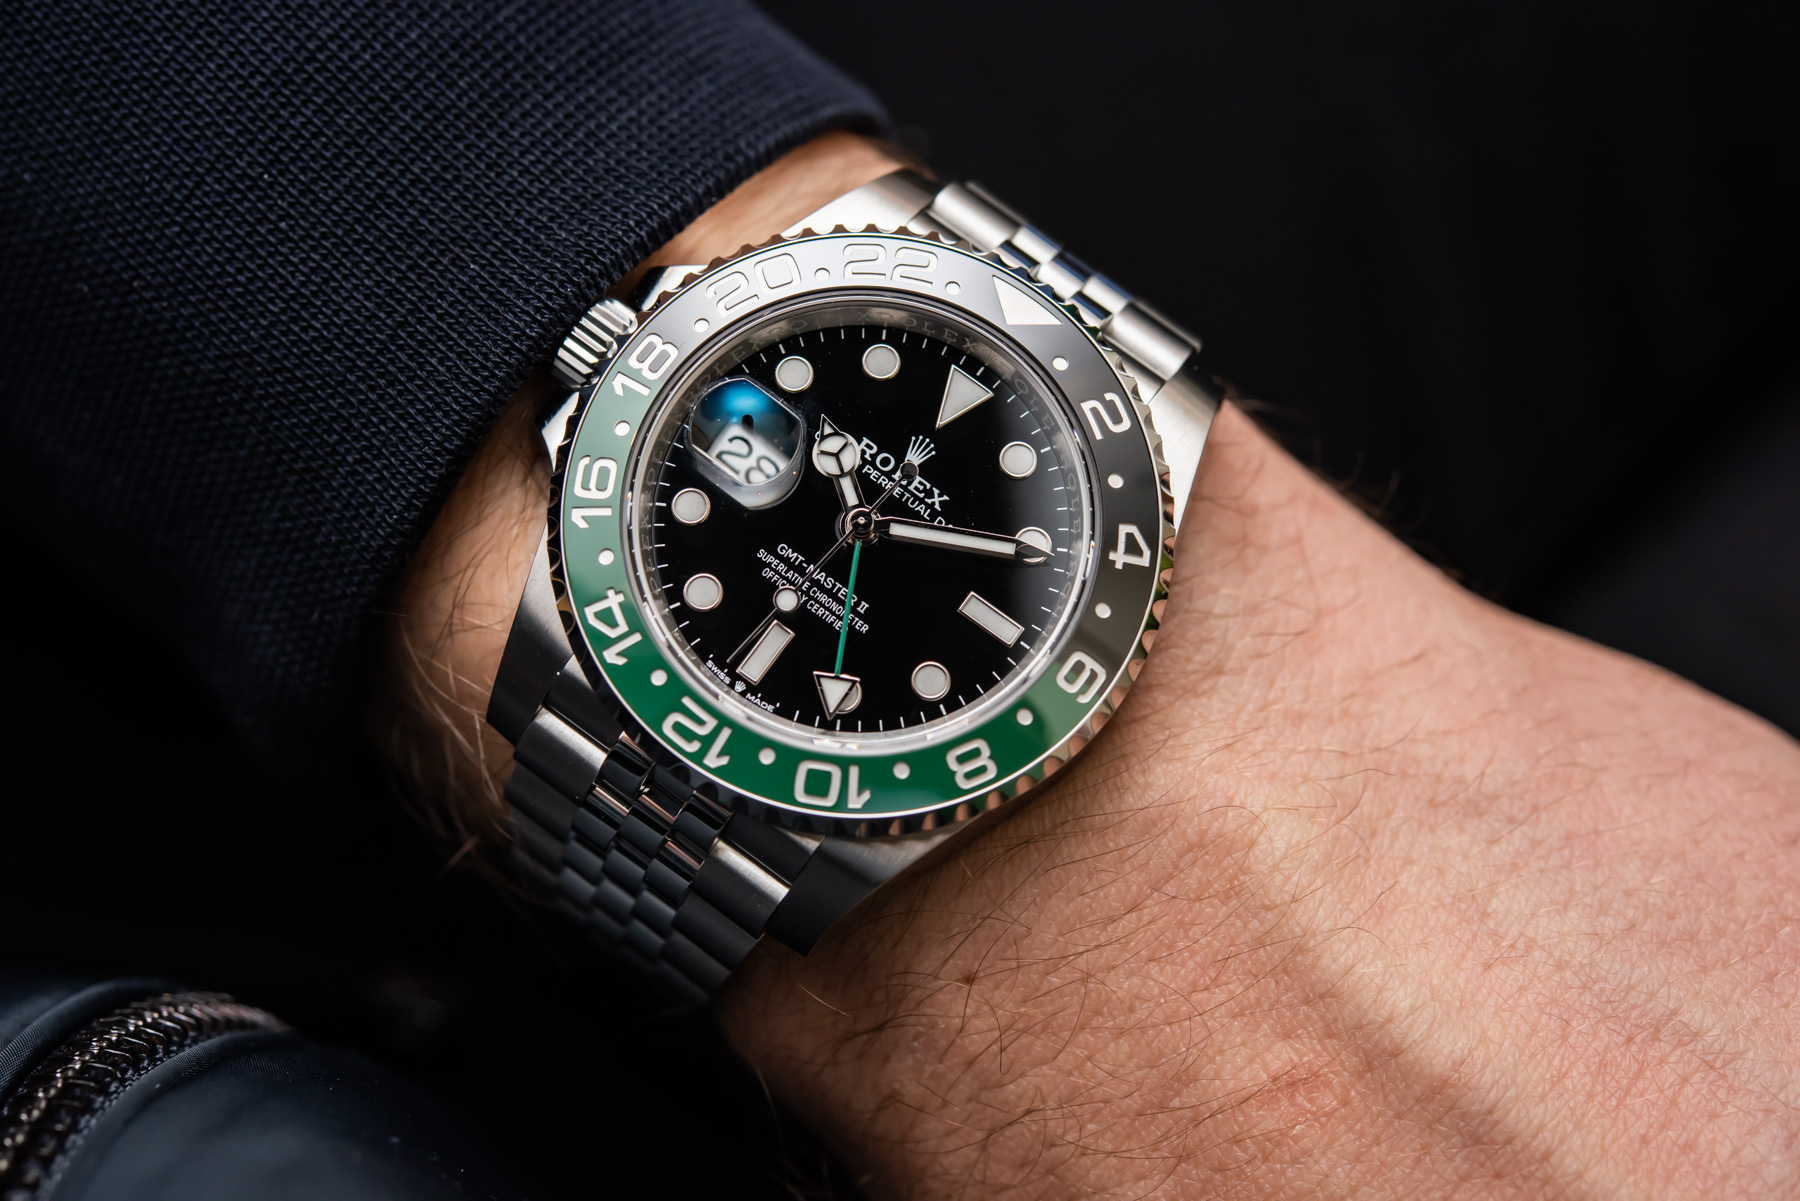 Modtager Elektriker lomme Hands-On: Rolex GMT Master-II Ref. 126720 VTNR 'Destro' Left-Handed Watch |  aBlogtoWatch